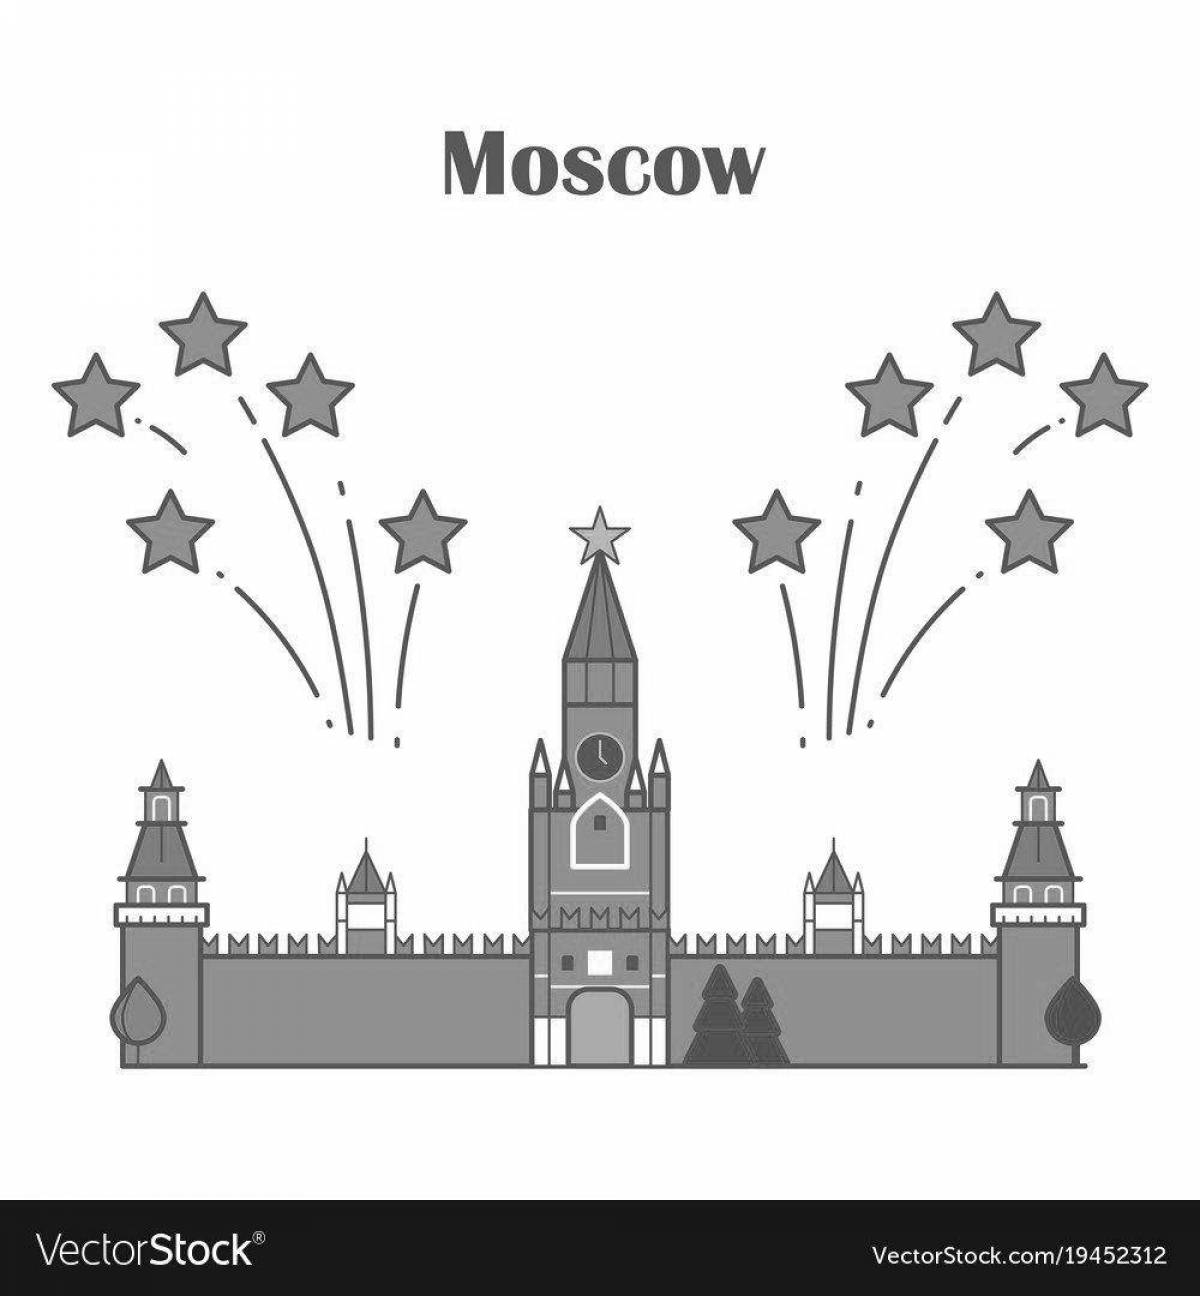 A fascinating Kremlin coloring book for kids